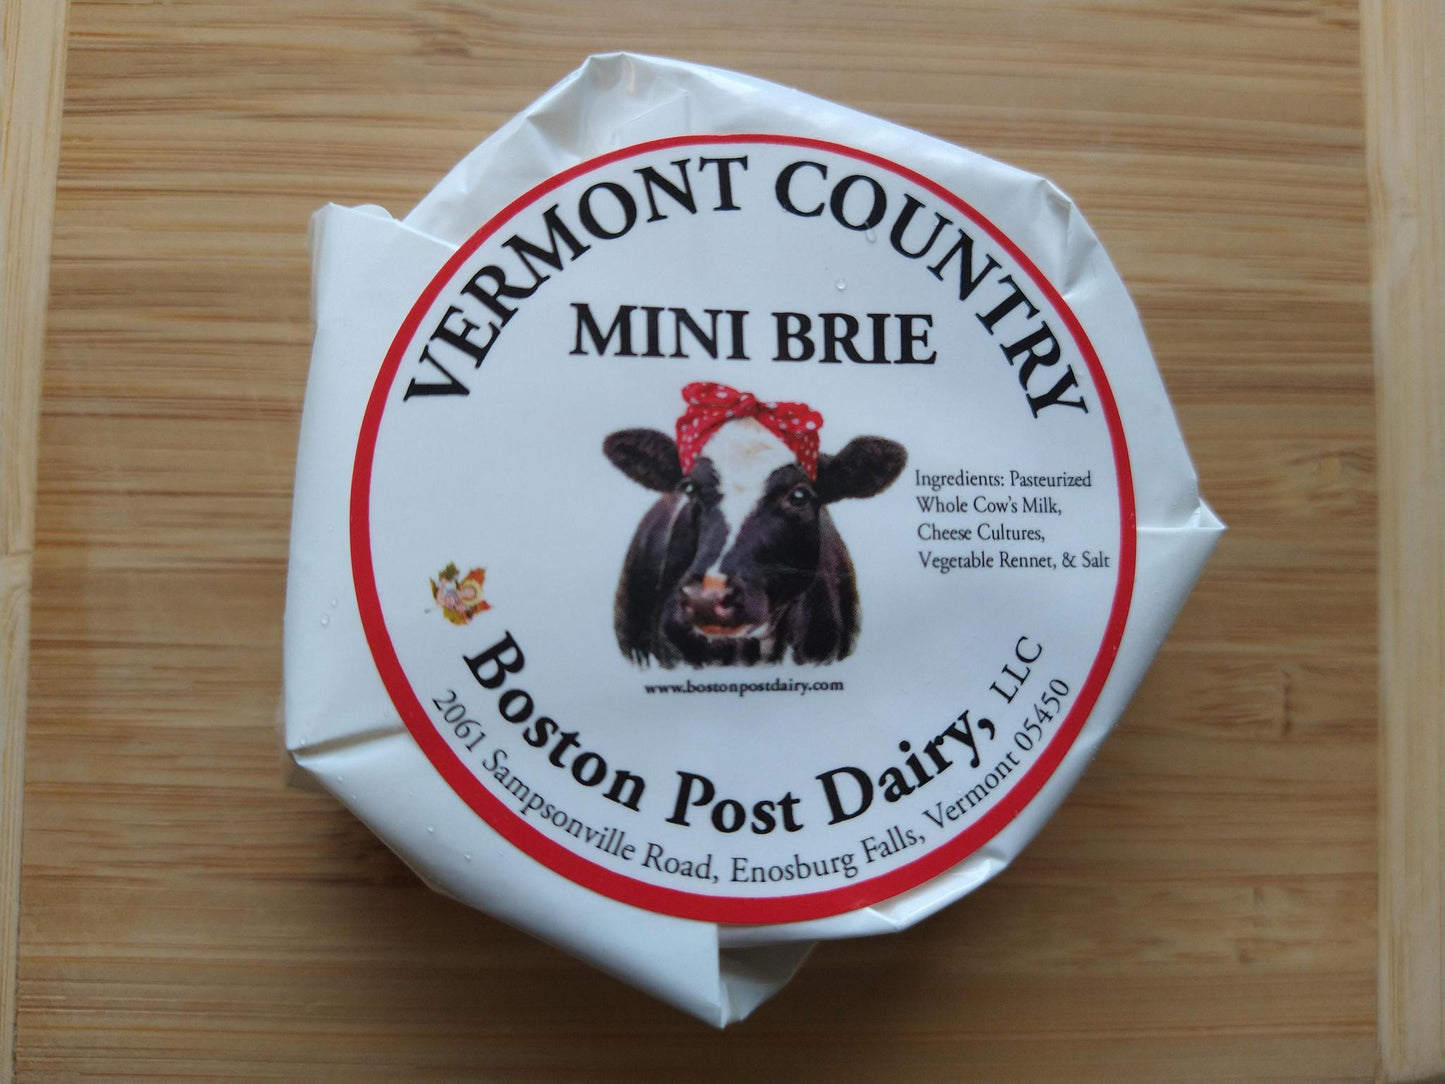 Vermont Country Mini Brie bundles